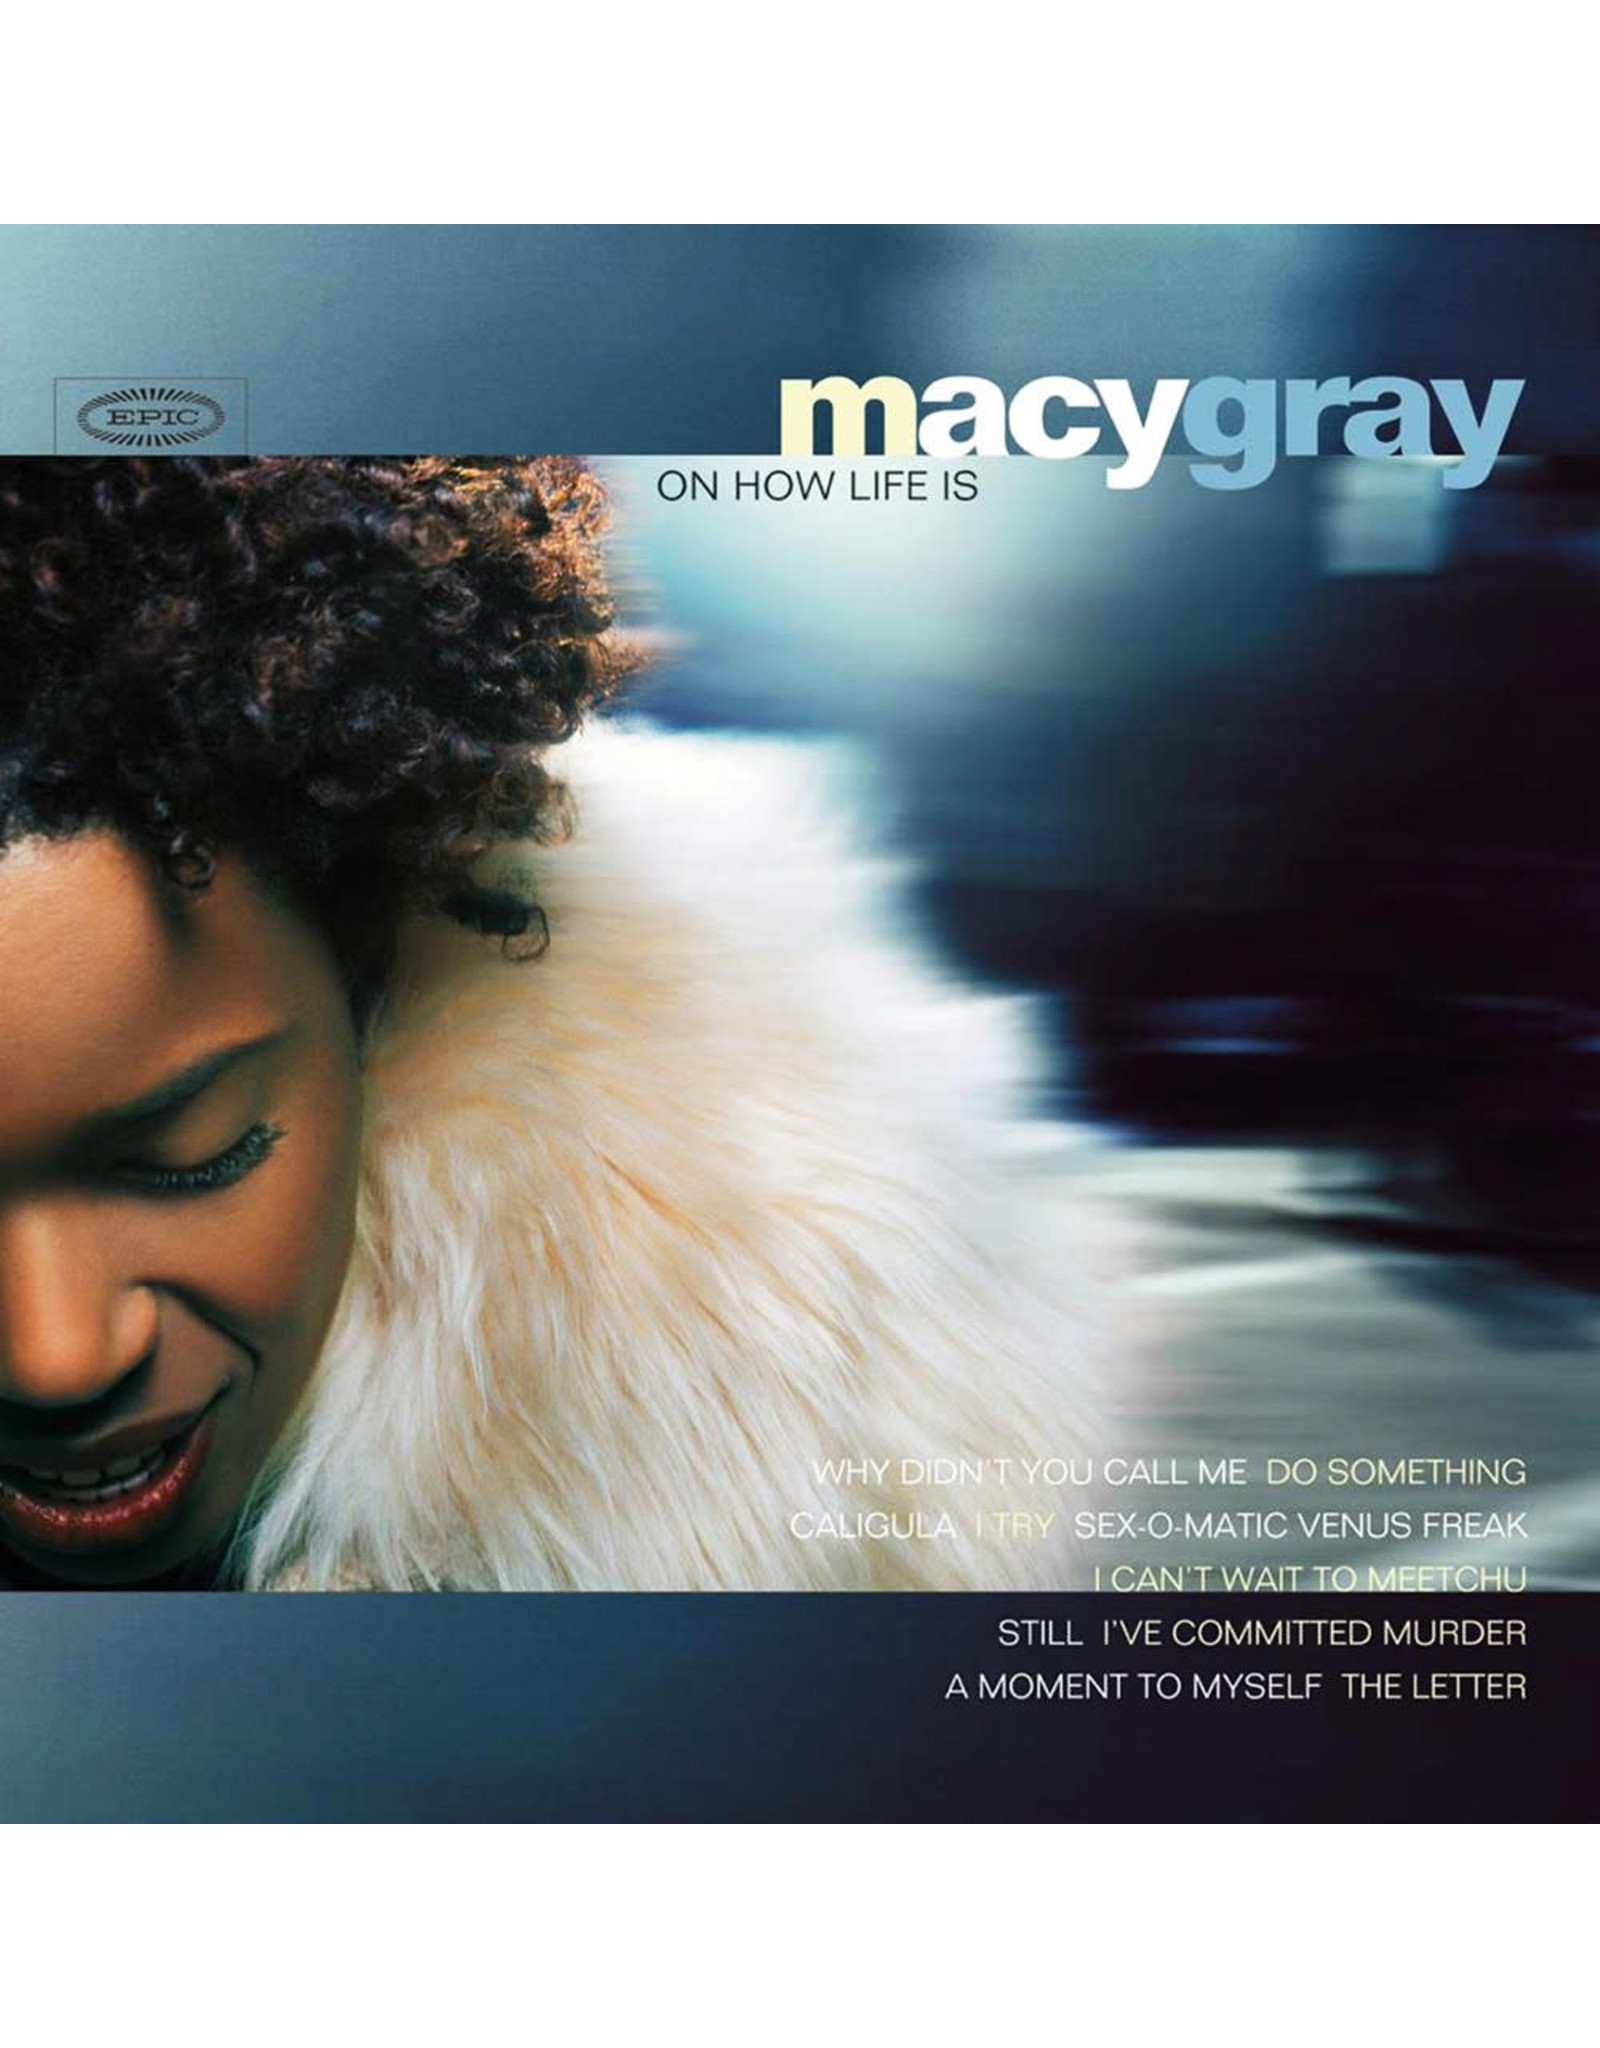 Macy Gray - On How Life Is (Music On Vinyl)